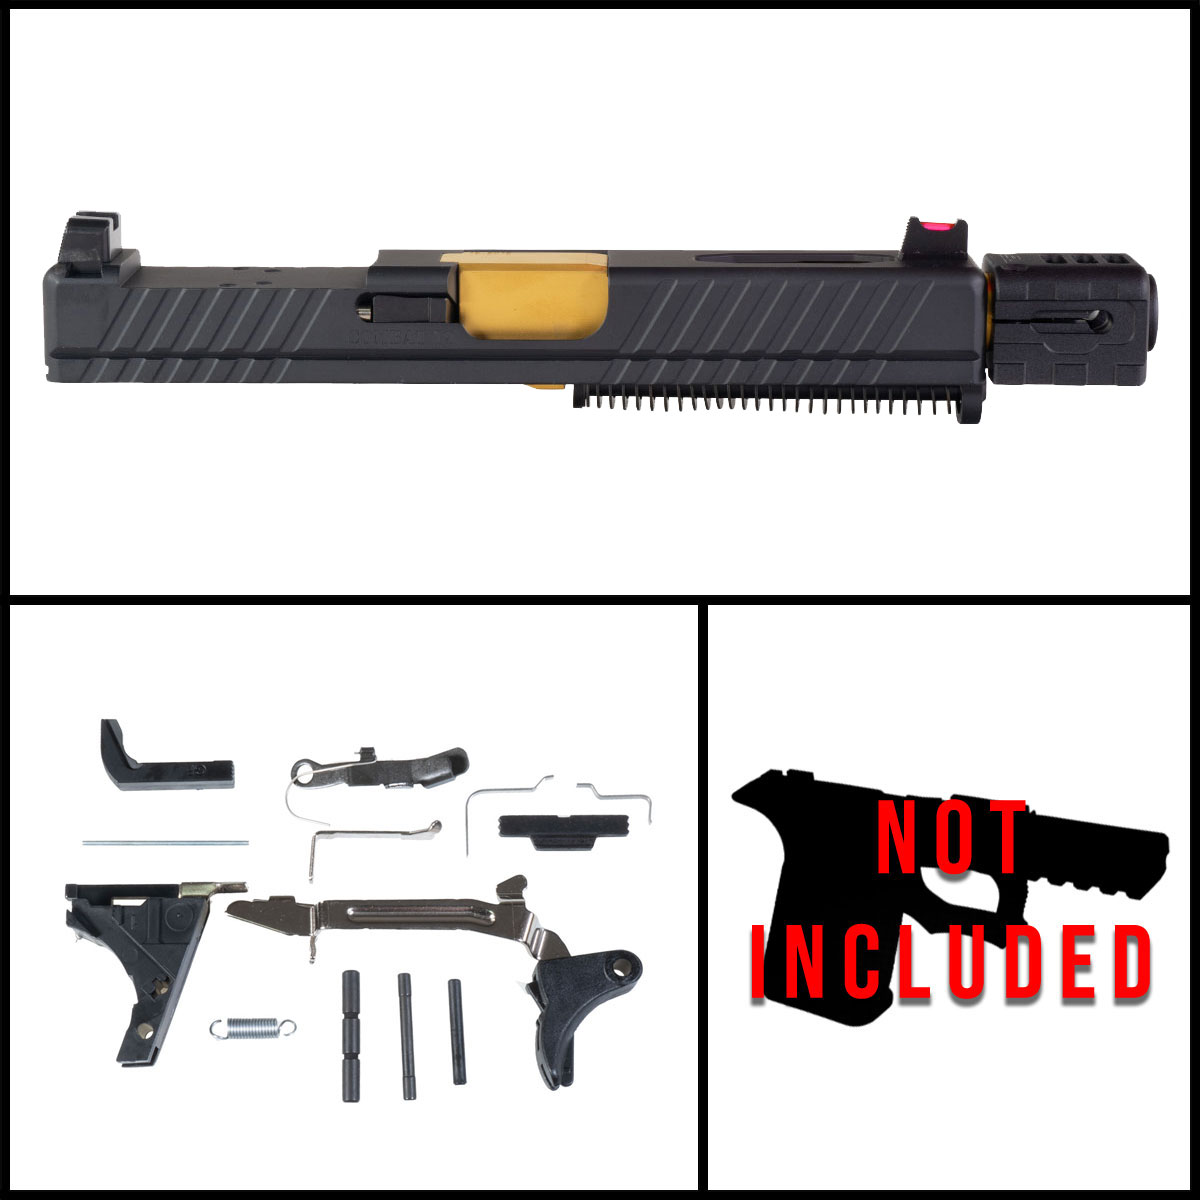 OTD 'Fanrong w/ Sylvan Arms Compensator' 9mm Full Pistol Build Kit (Everything Minus Frame) - Glock 19 Gen 1-3 Compatible